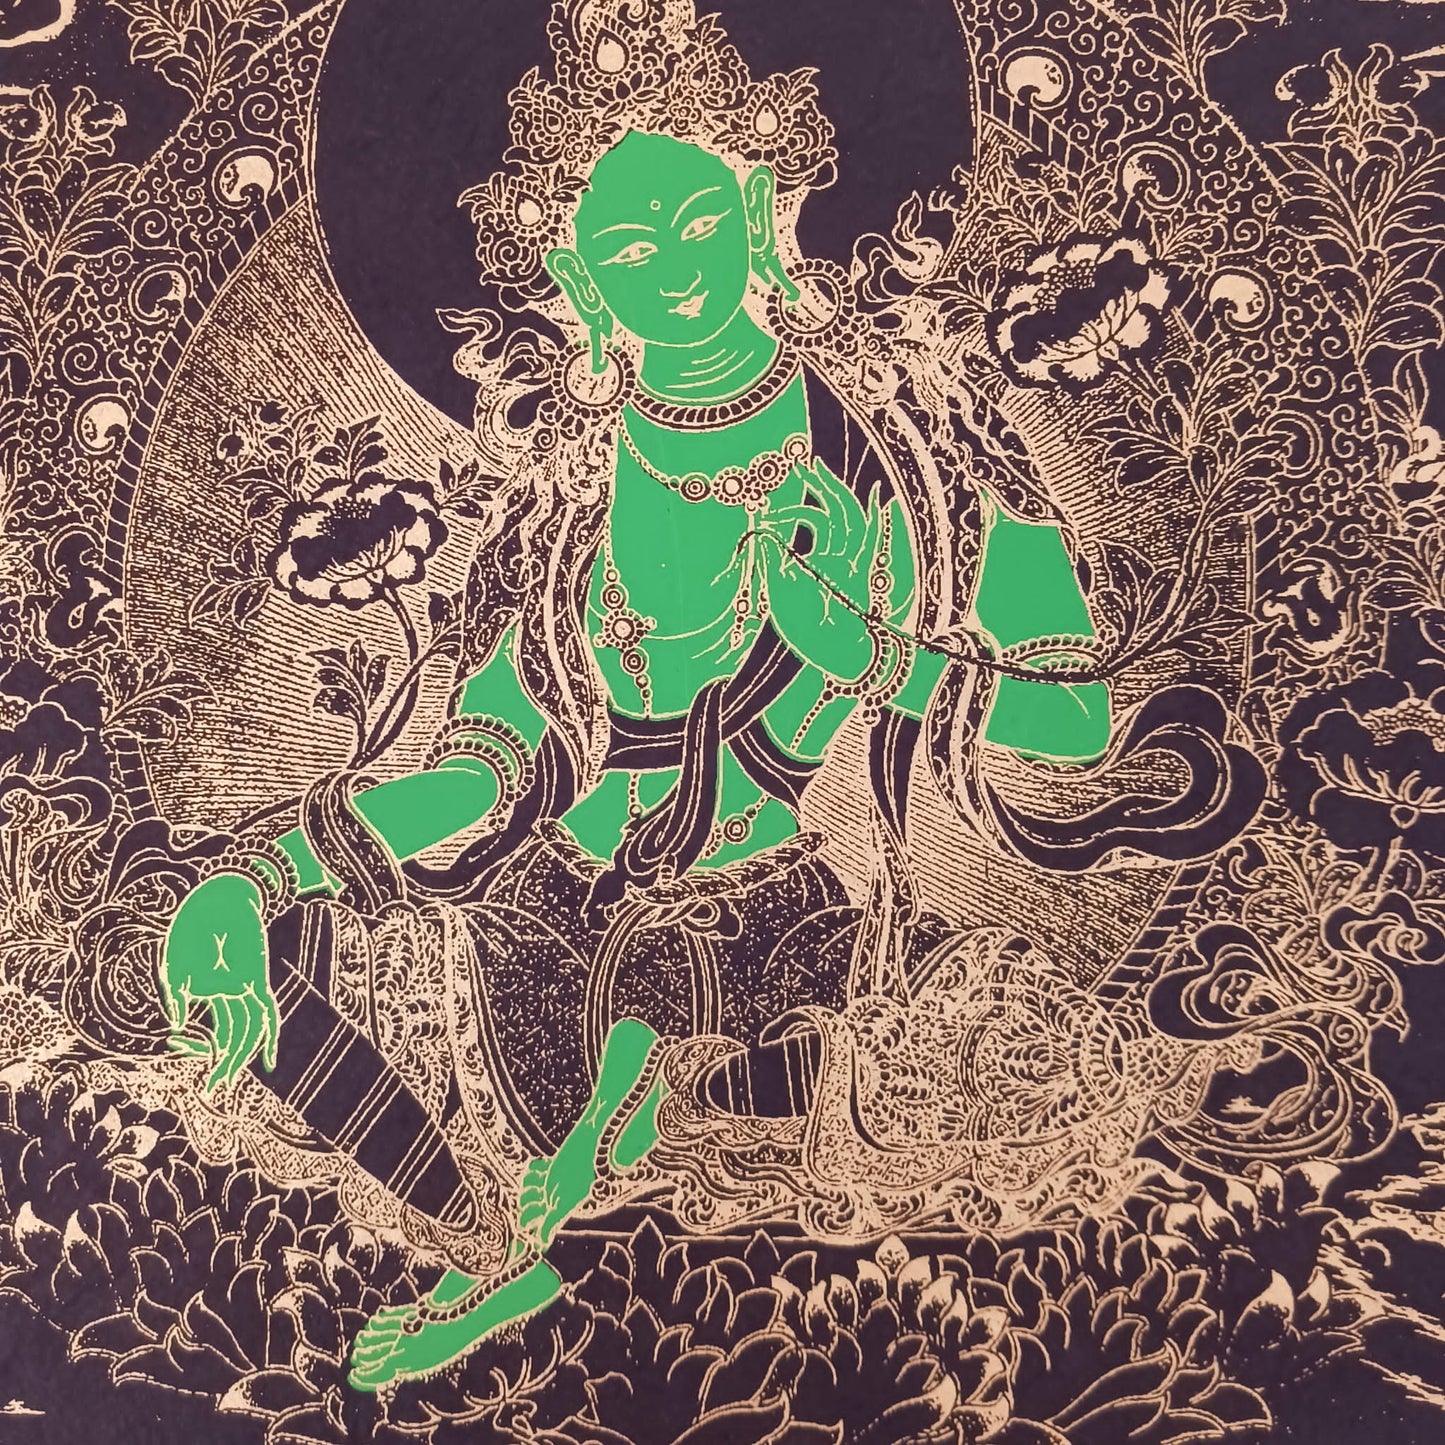 Green Tara Lokta Paper Painting | Gold on Black